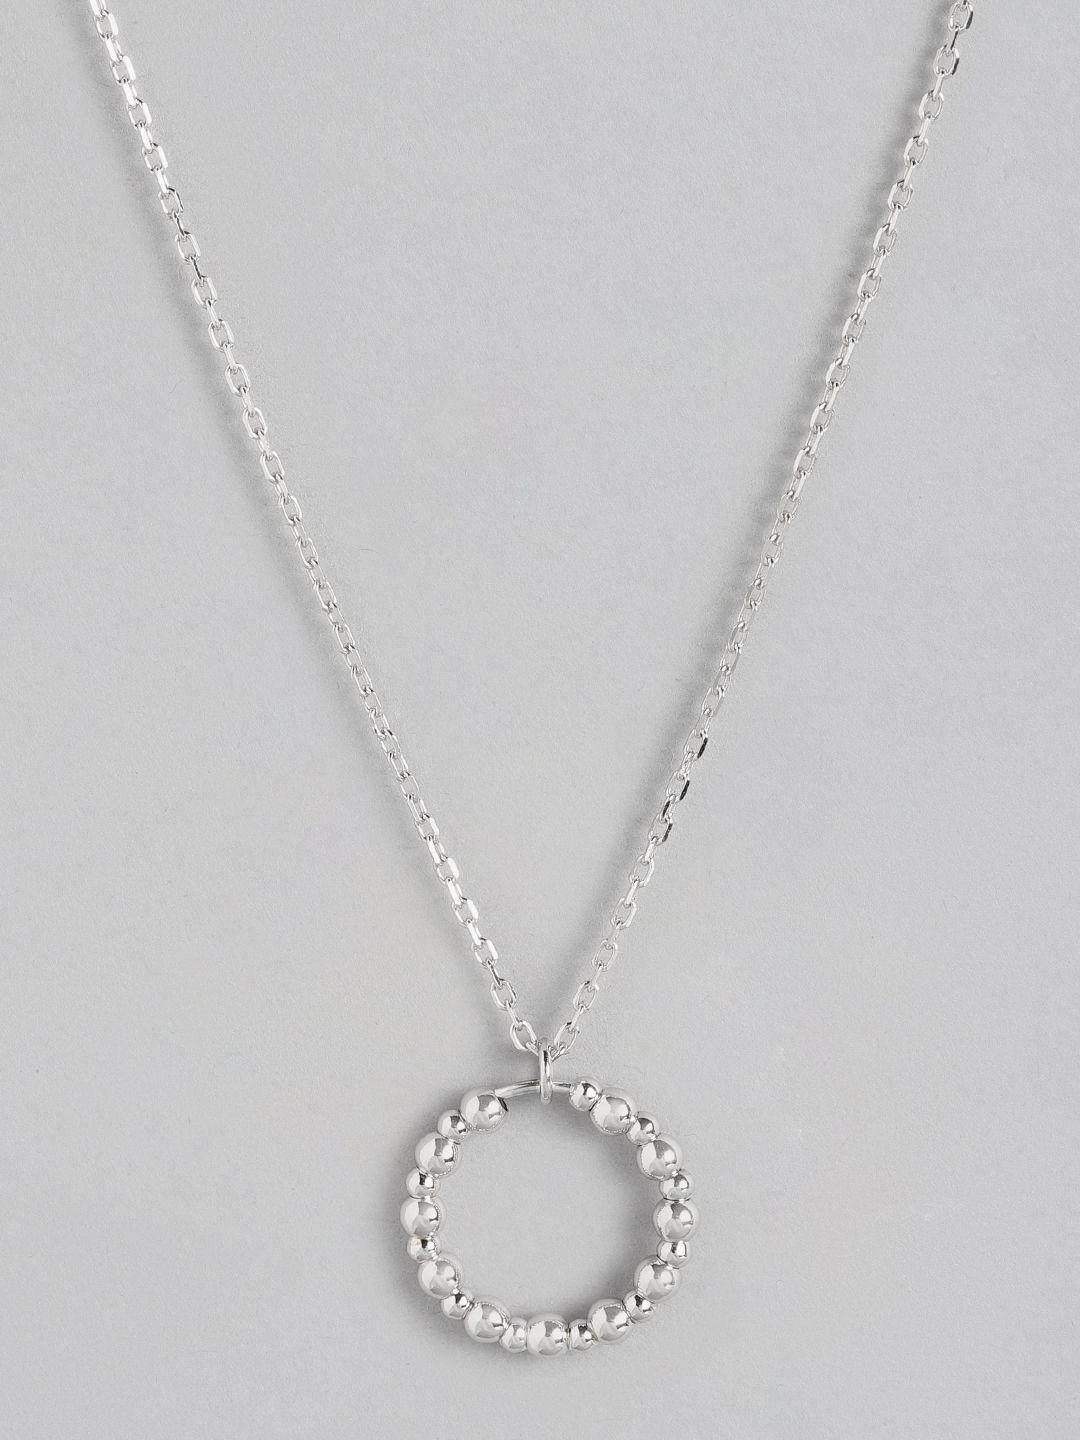 carlton-london-rhodium-plated-circular-pendant-with-chain